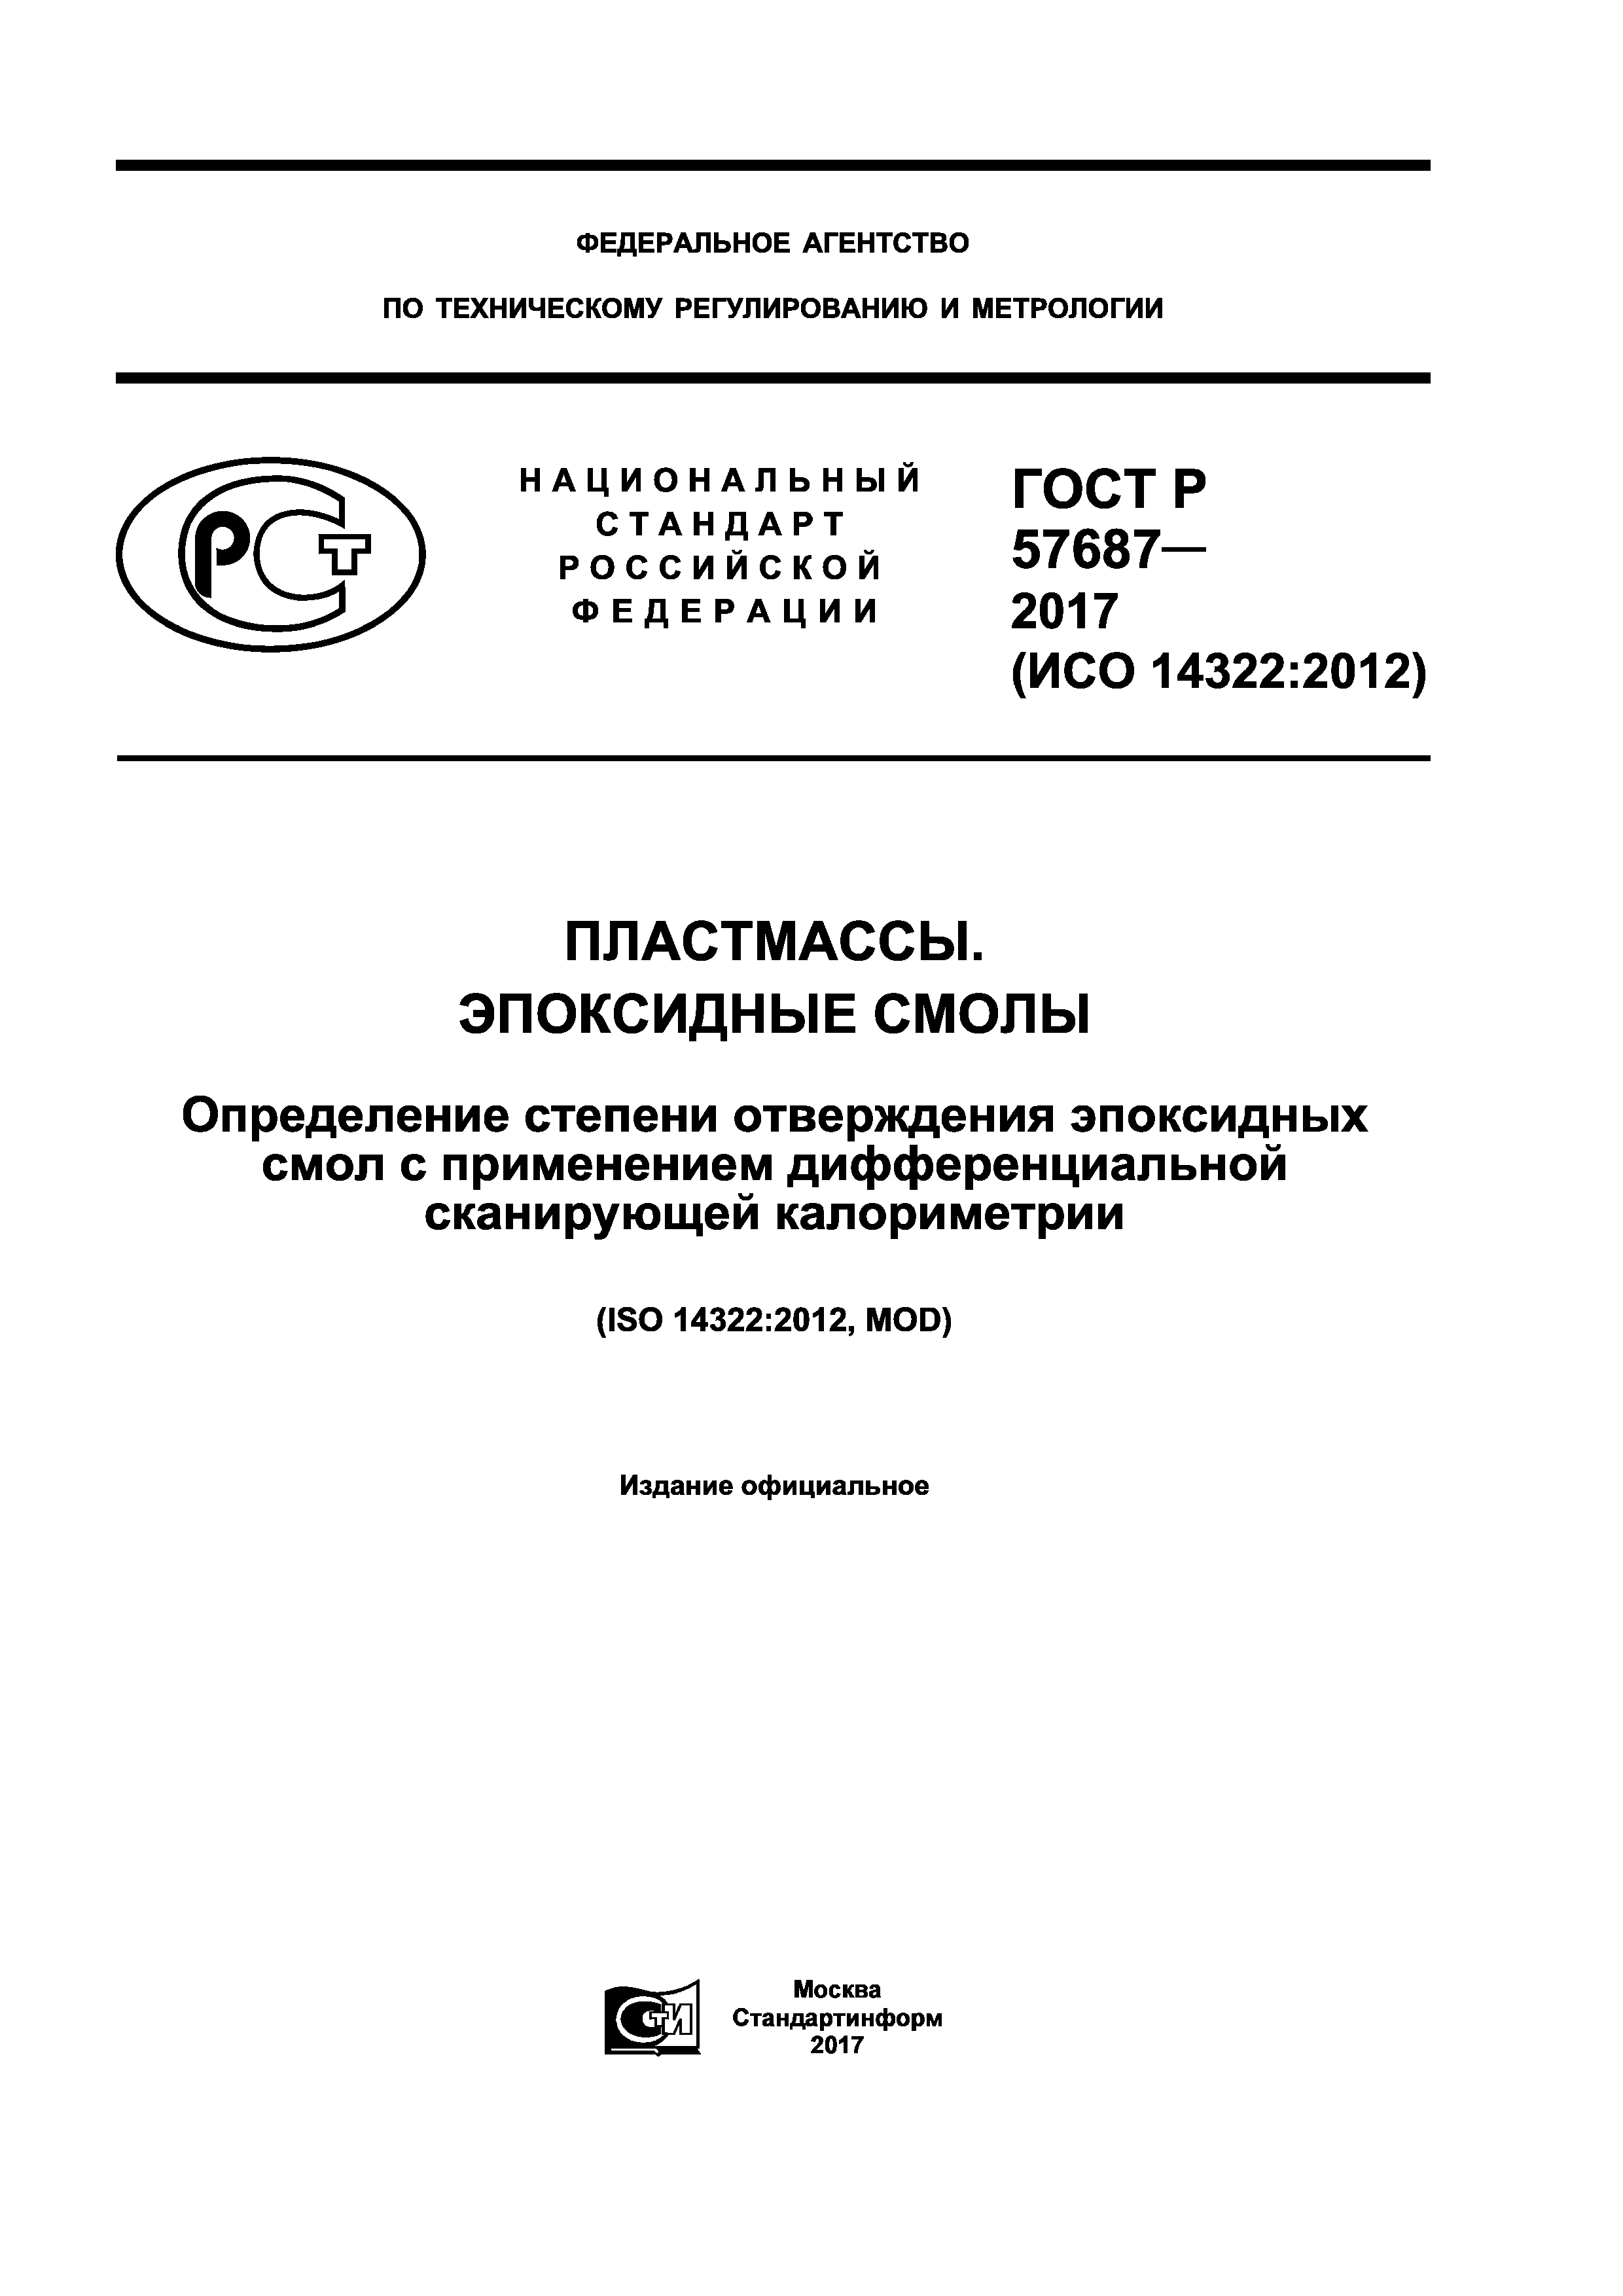 ГОСТ Р 57687-2017